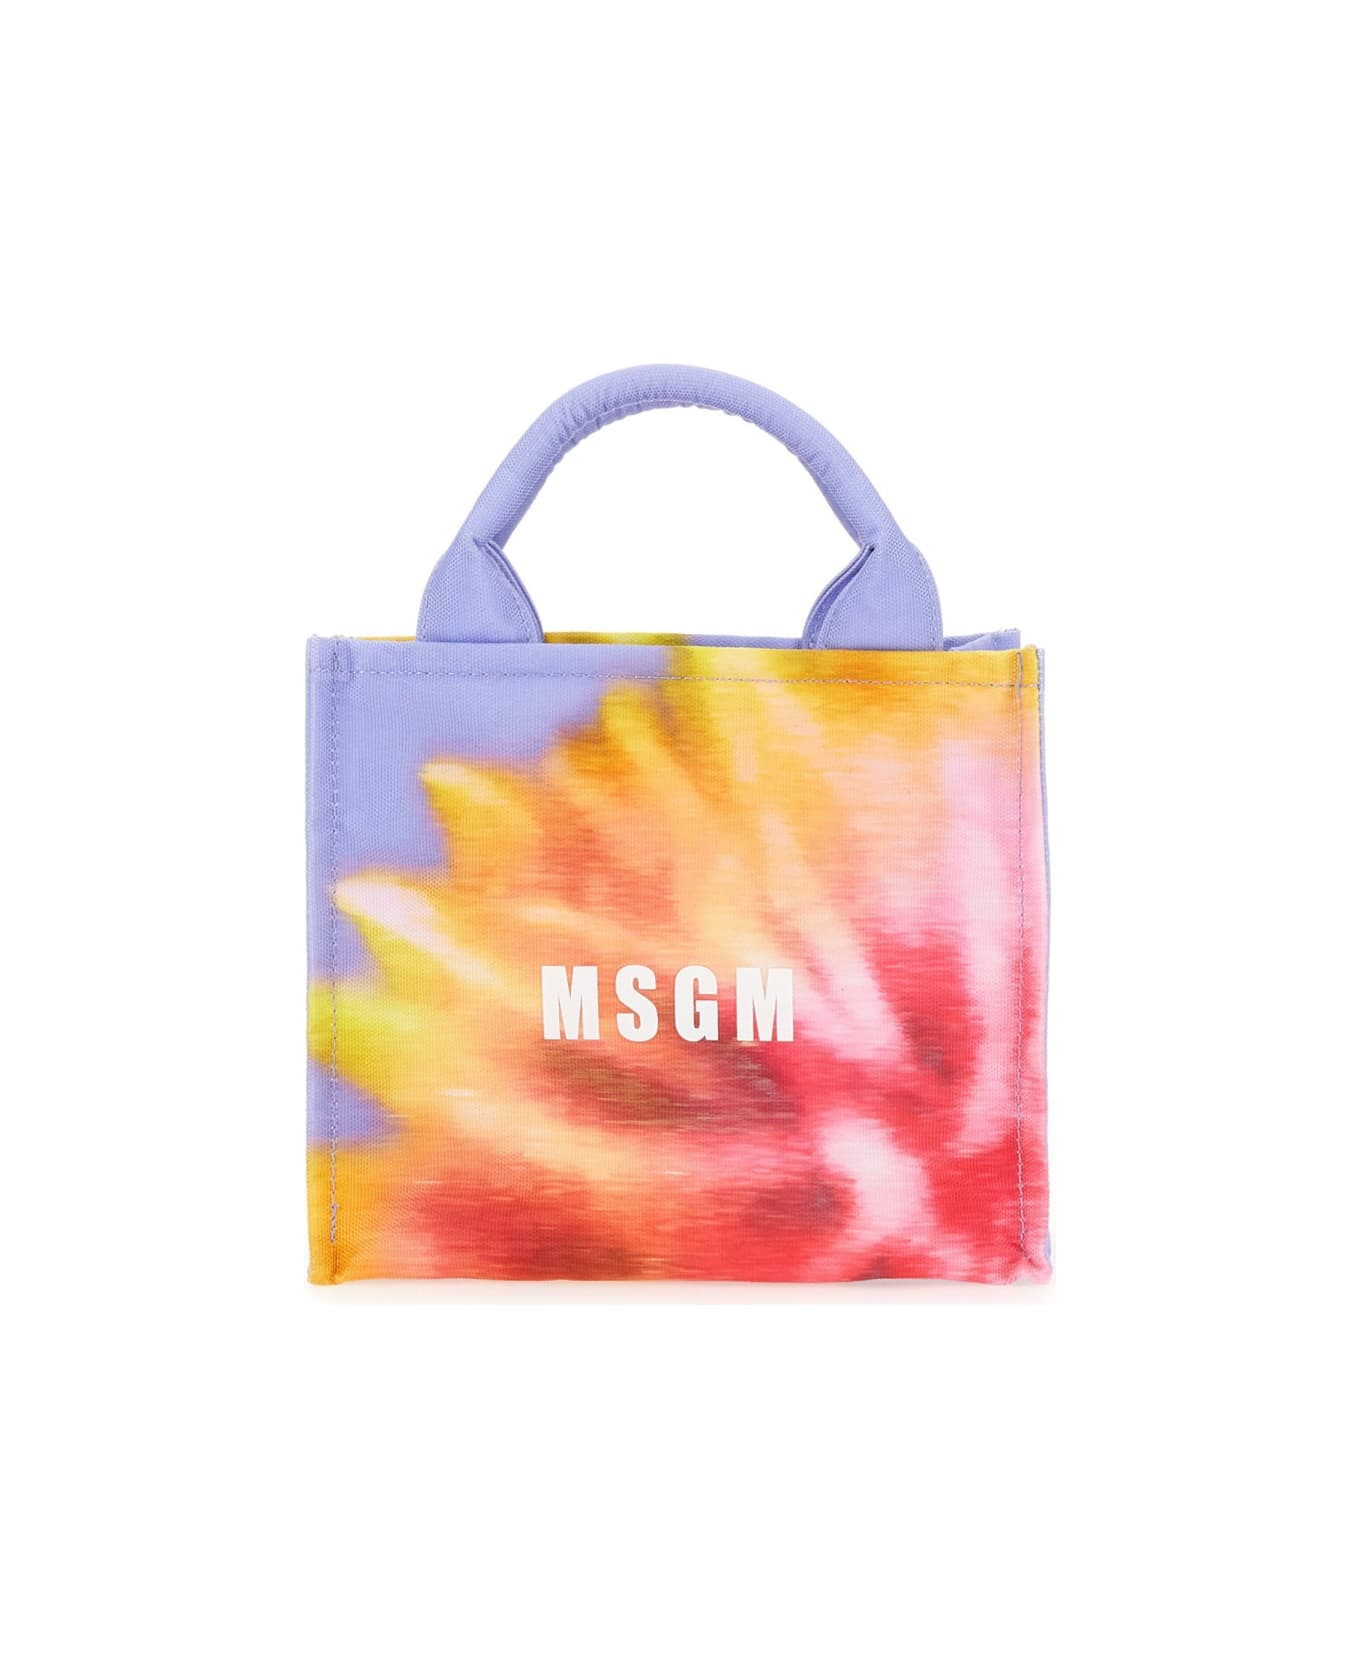 MSGM Small Tote Bag With Daisy Print - MULTICOLOUR